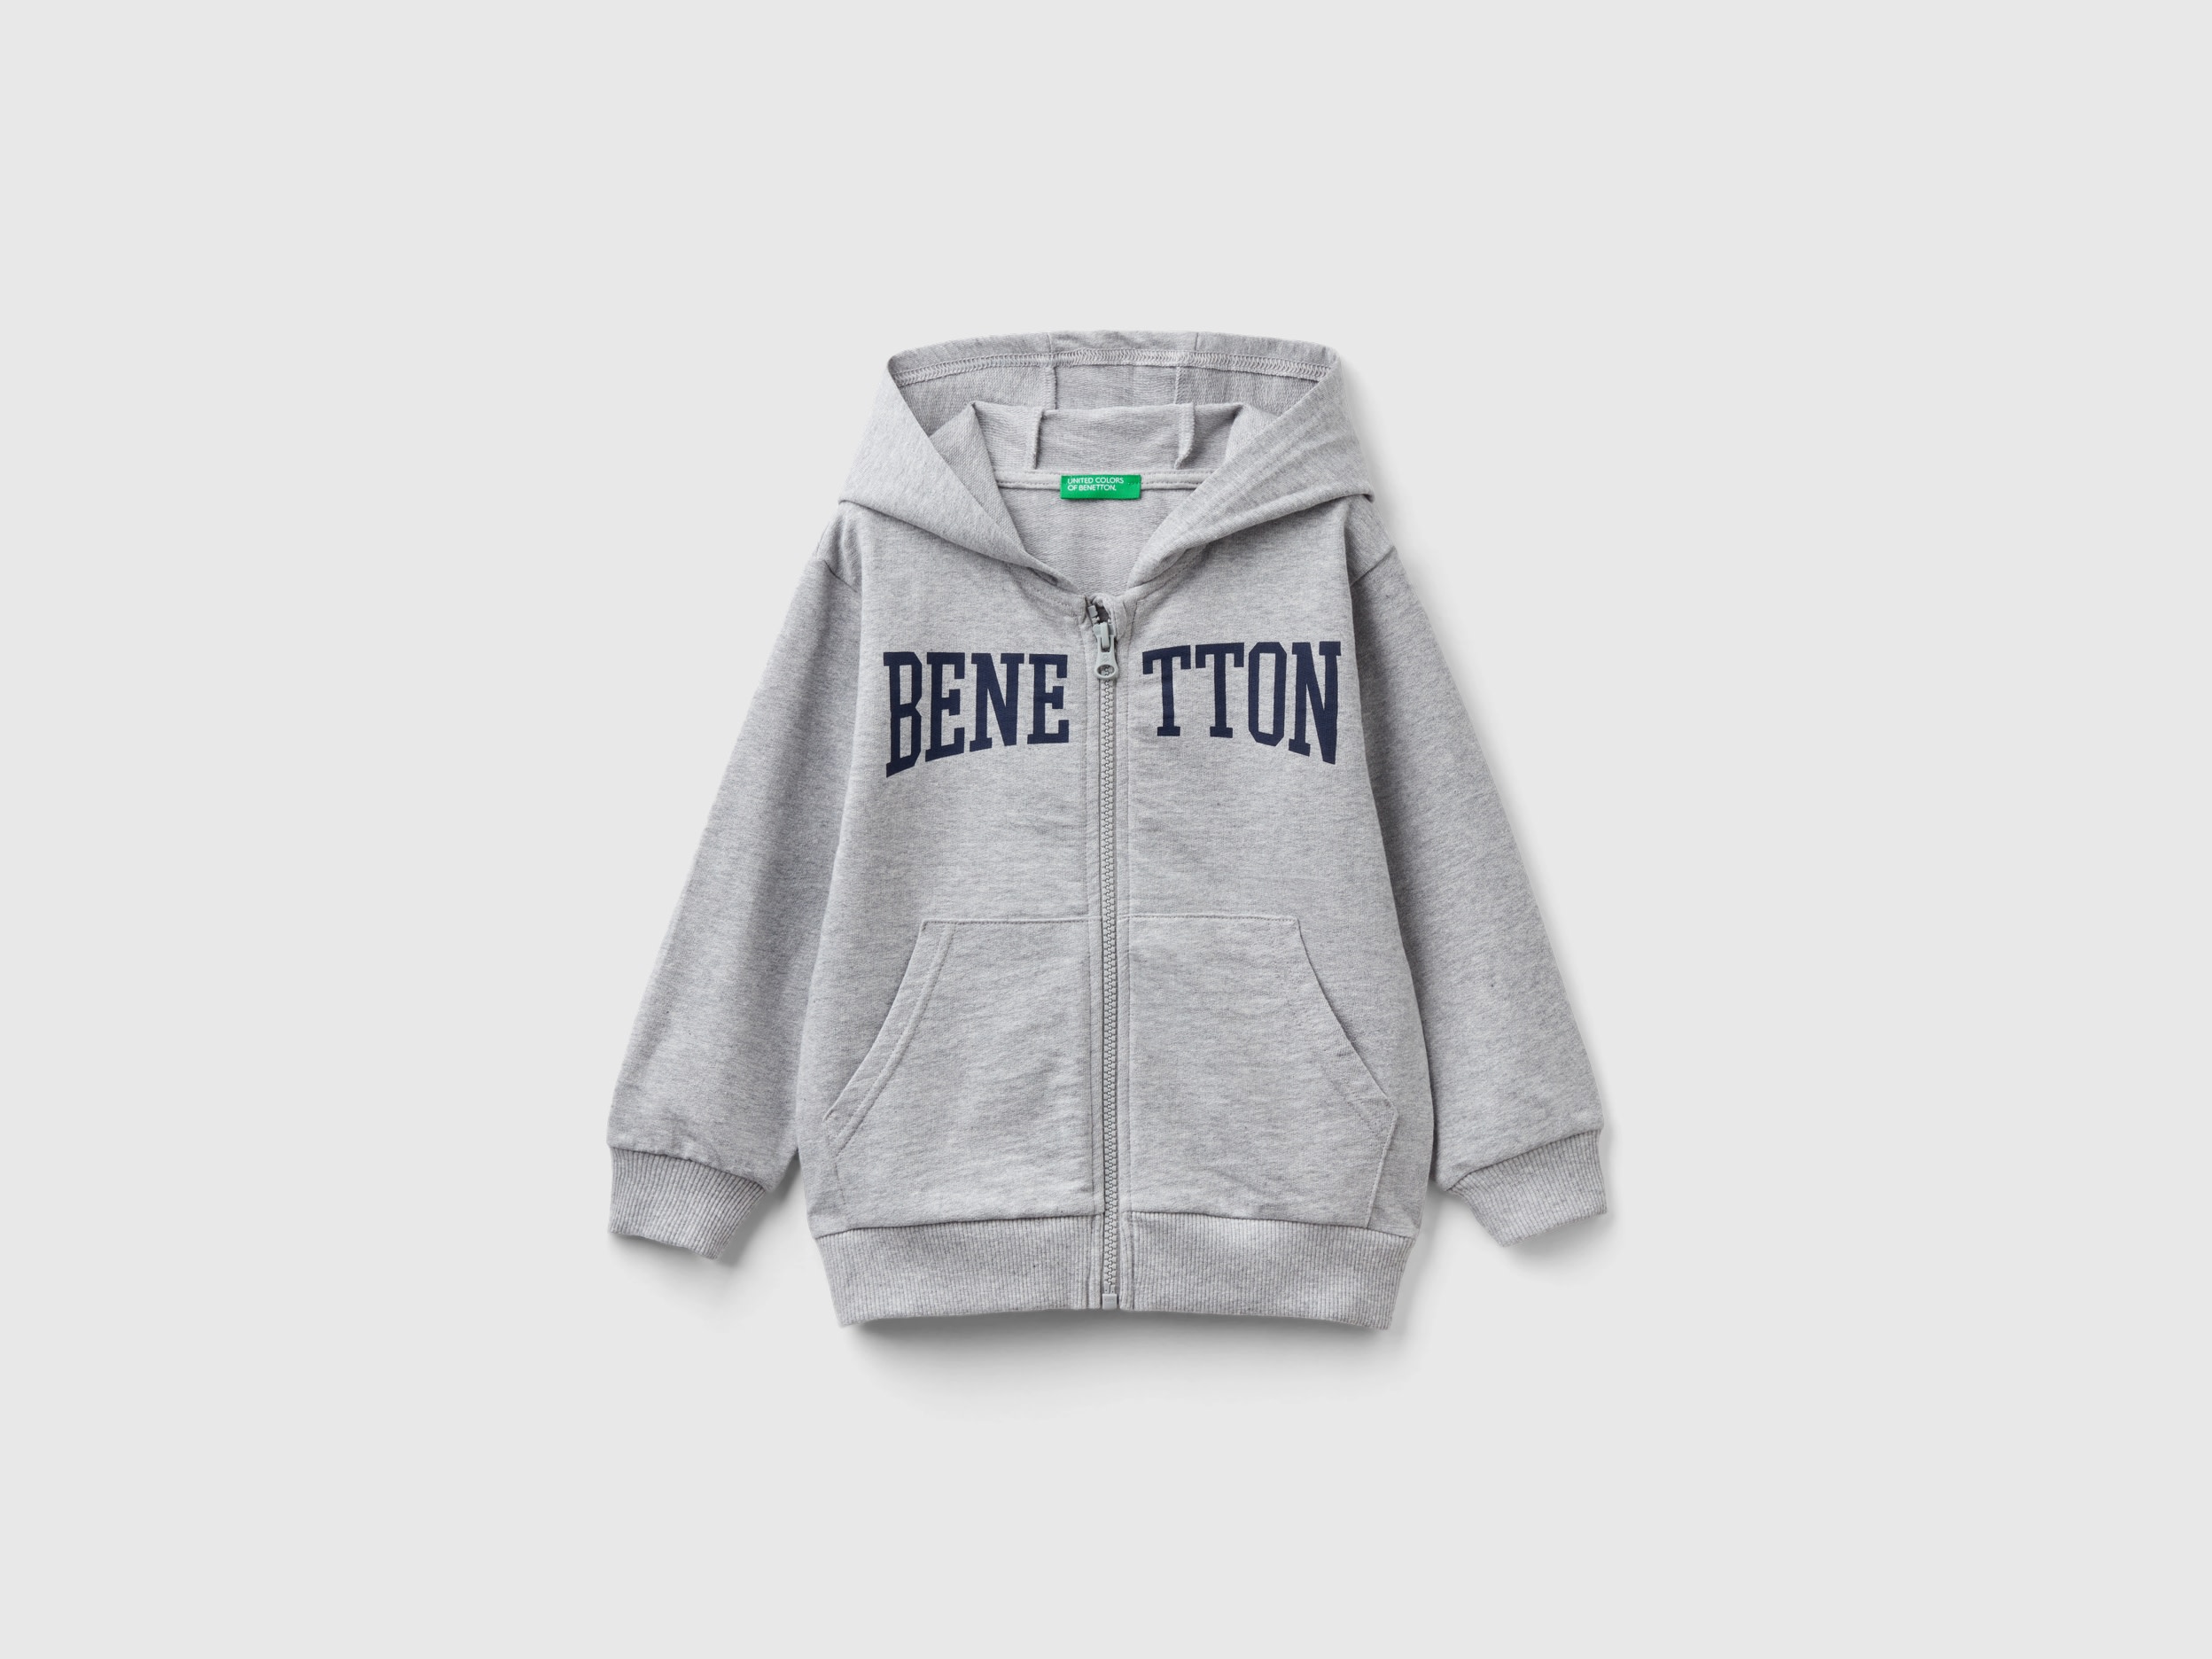 Benetton, Lightweight Sweatshirt With Zip, size 2-3, Light Gray, Kids